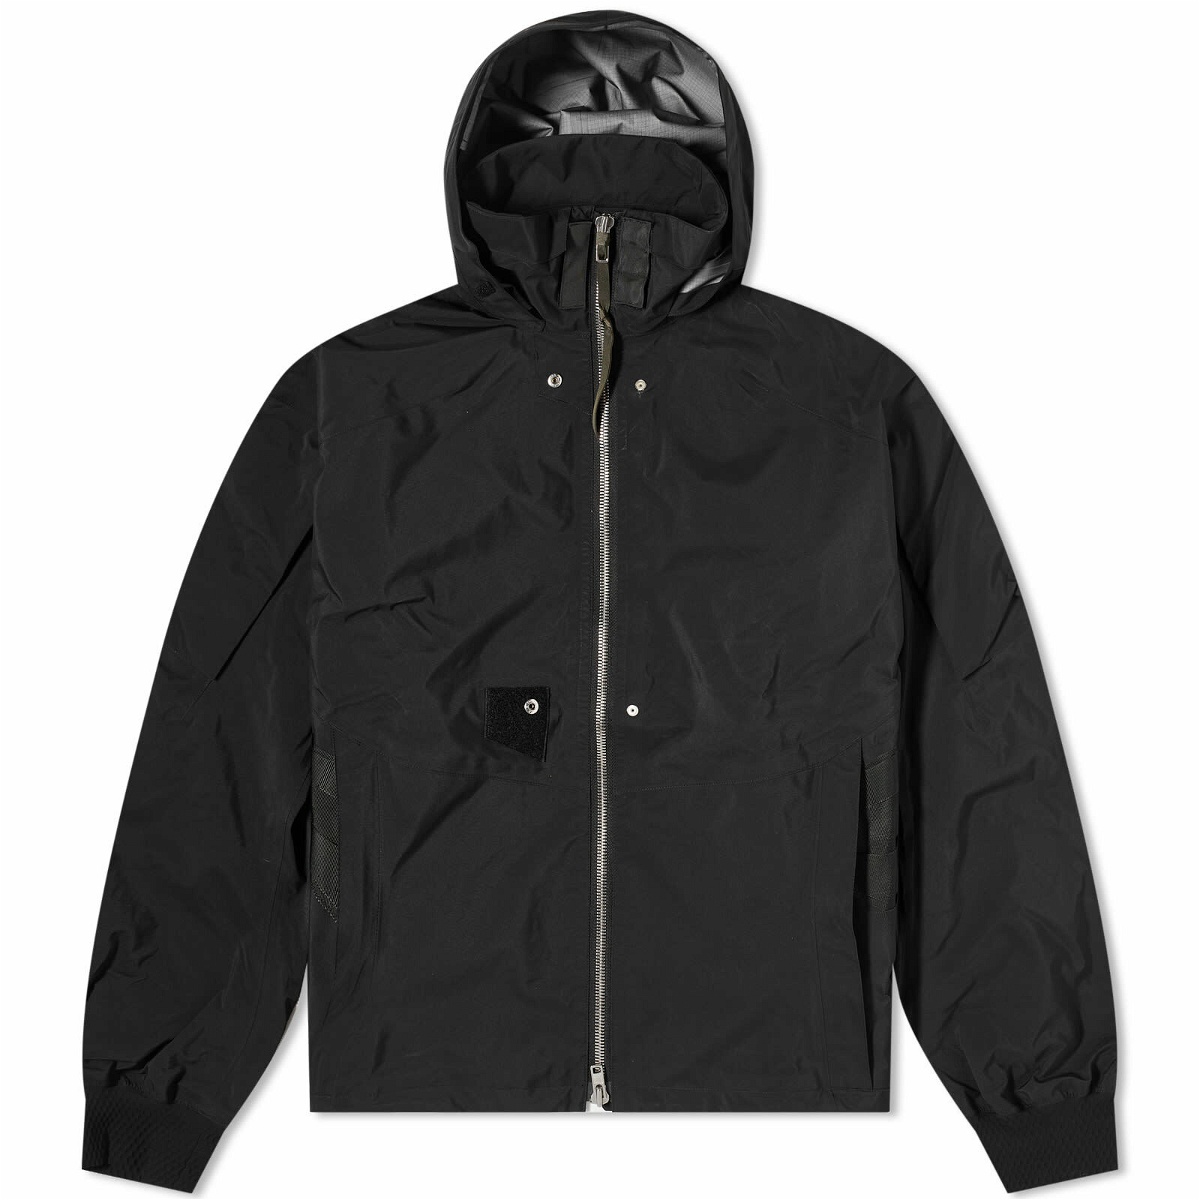 Acronym Men's 3L Gore-Tex Pro Tec Hard Shell Jacket in Black